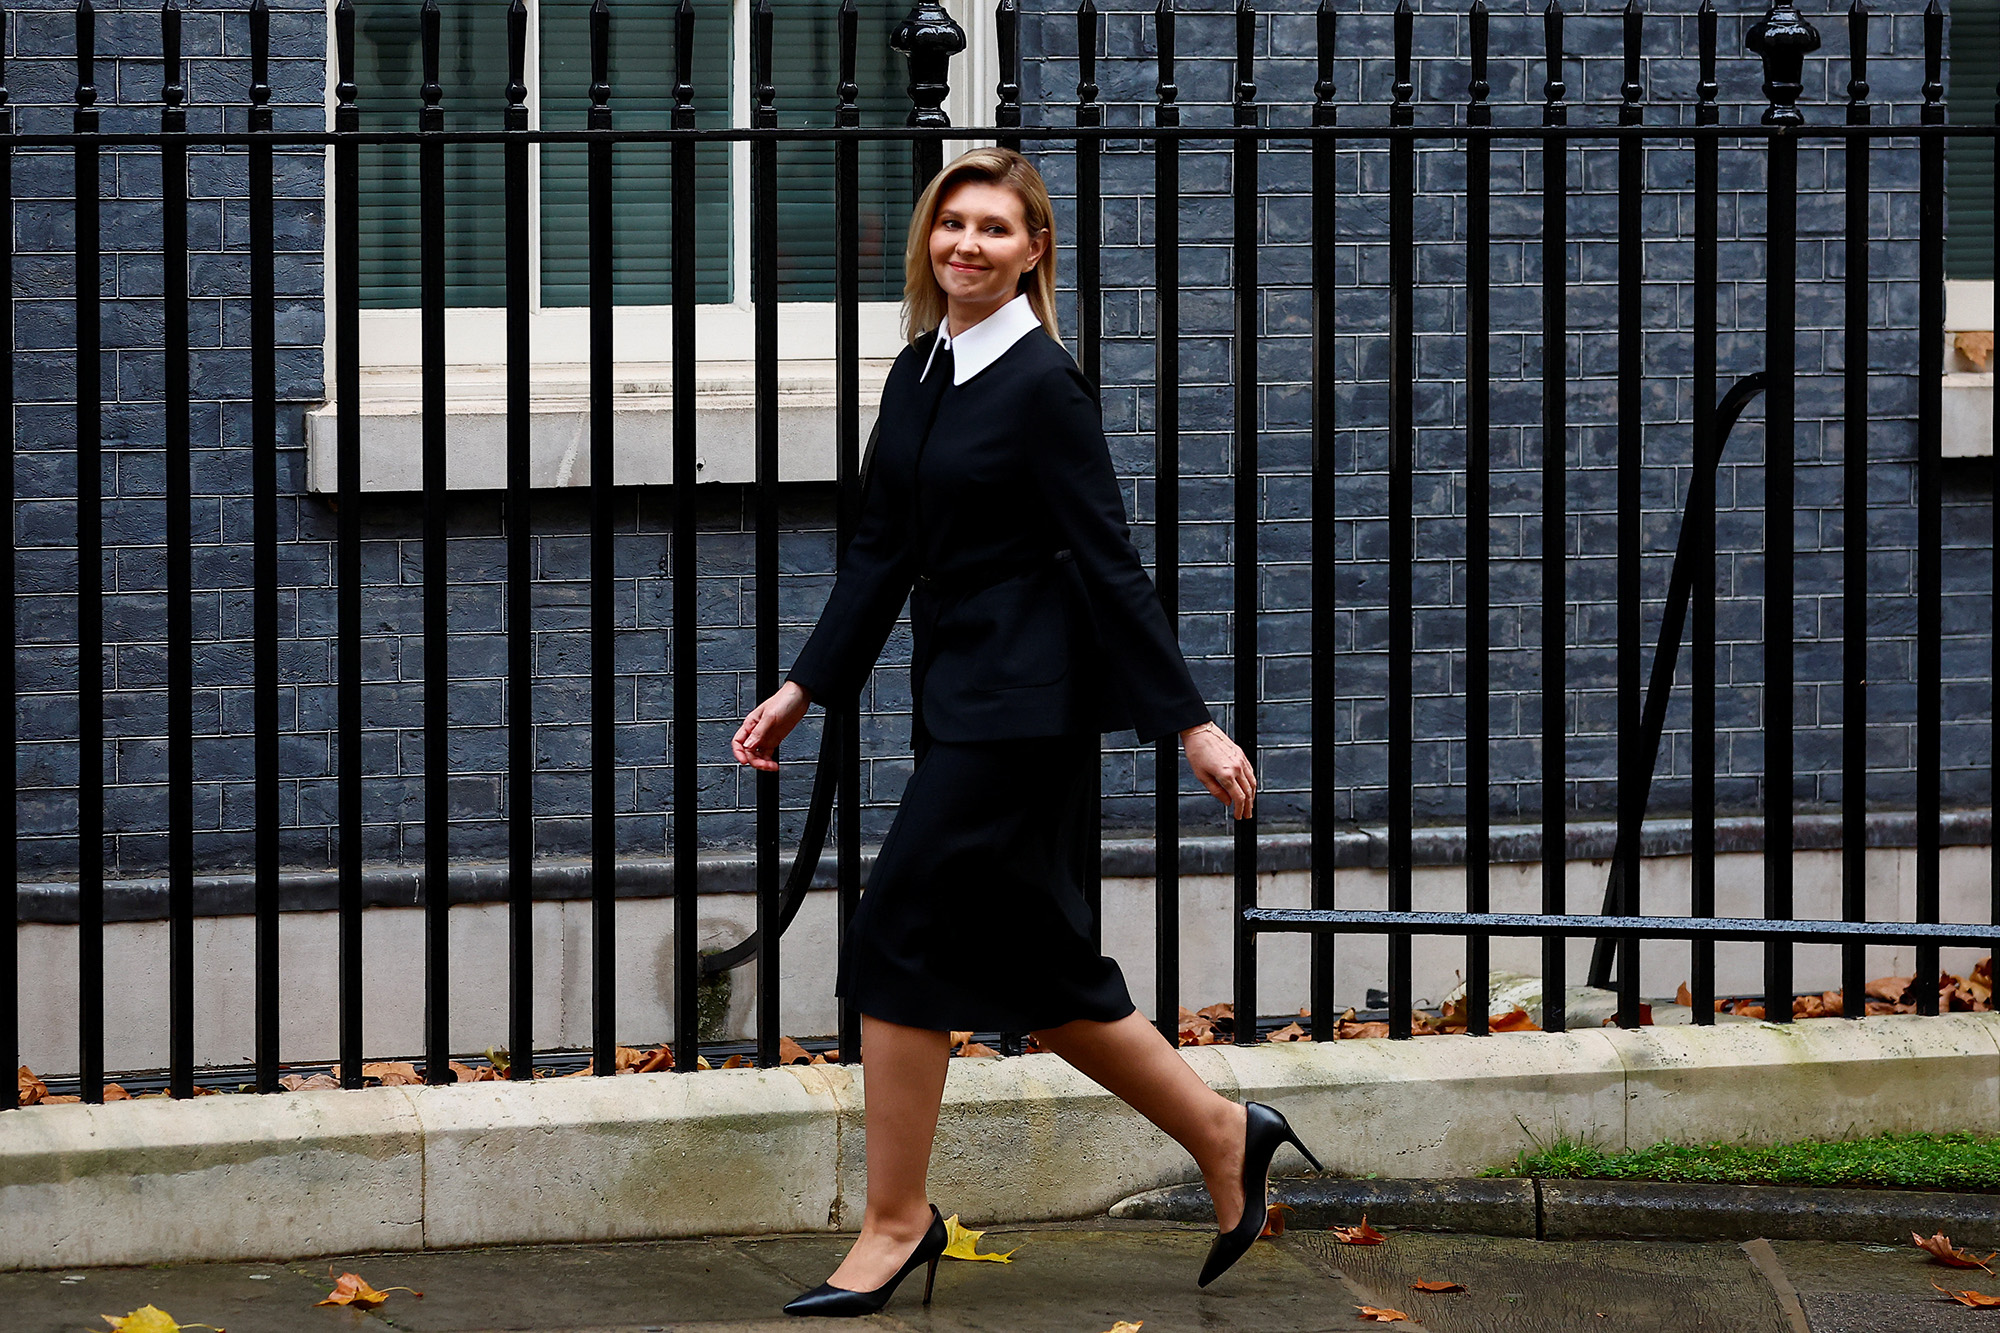 Ukraine's first lady Olena Zelenska walks outside Downing Street in London, England, on November 28.